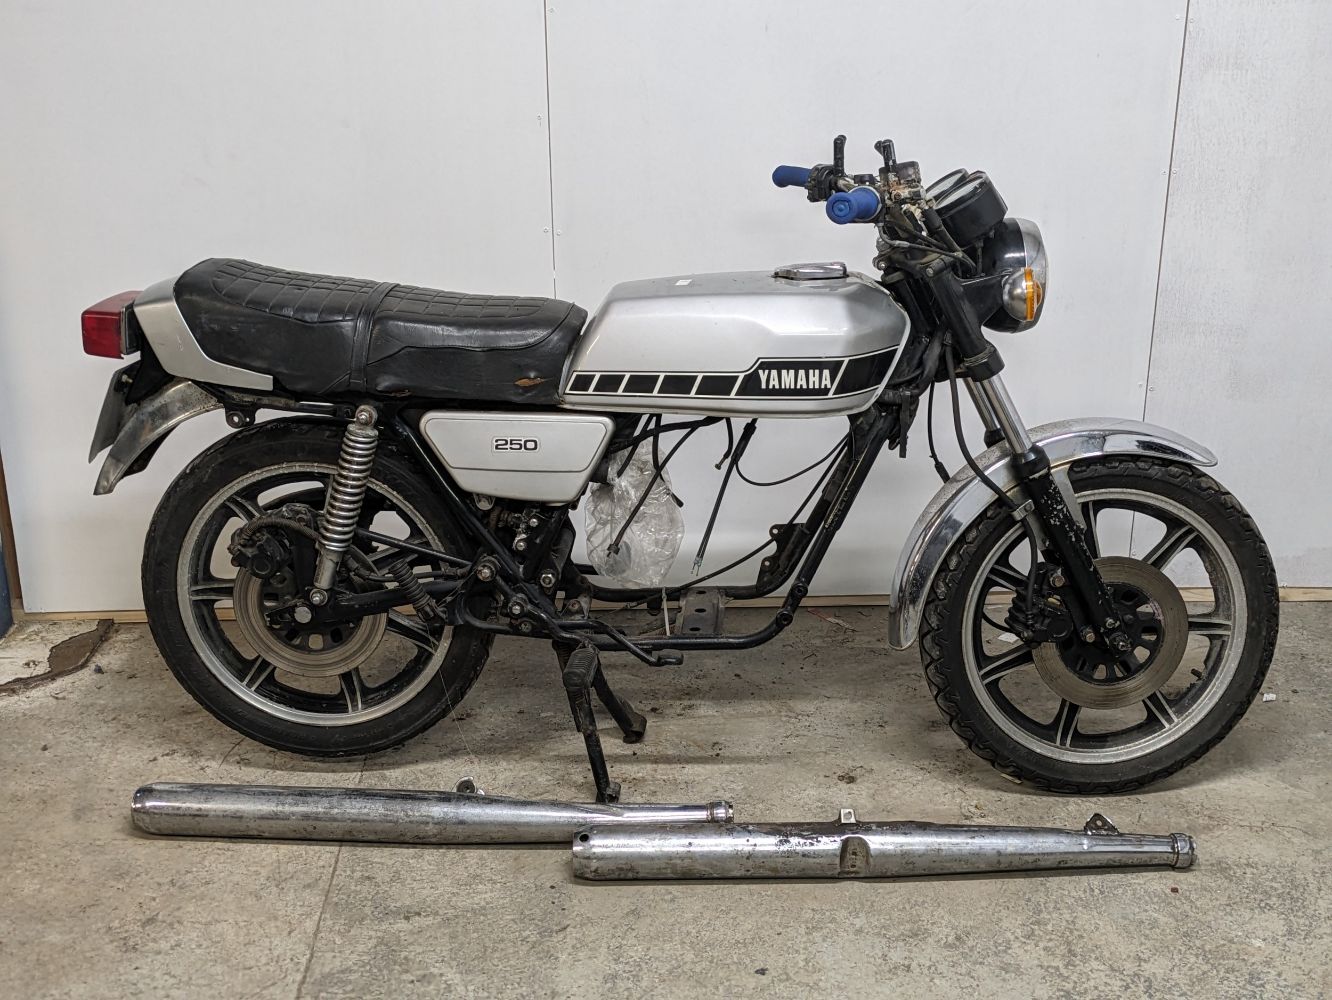 The Vintage Japanese Project Motorbike Sale